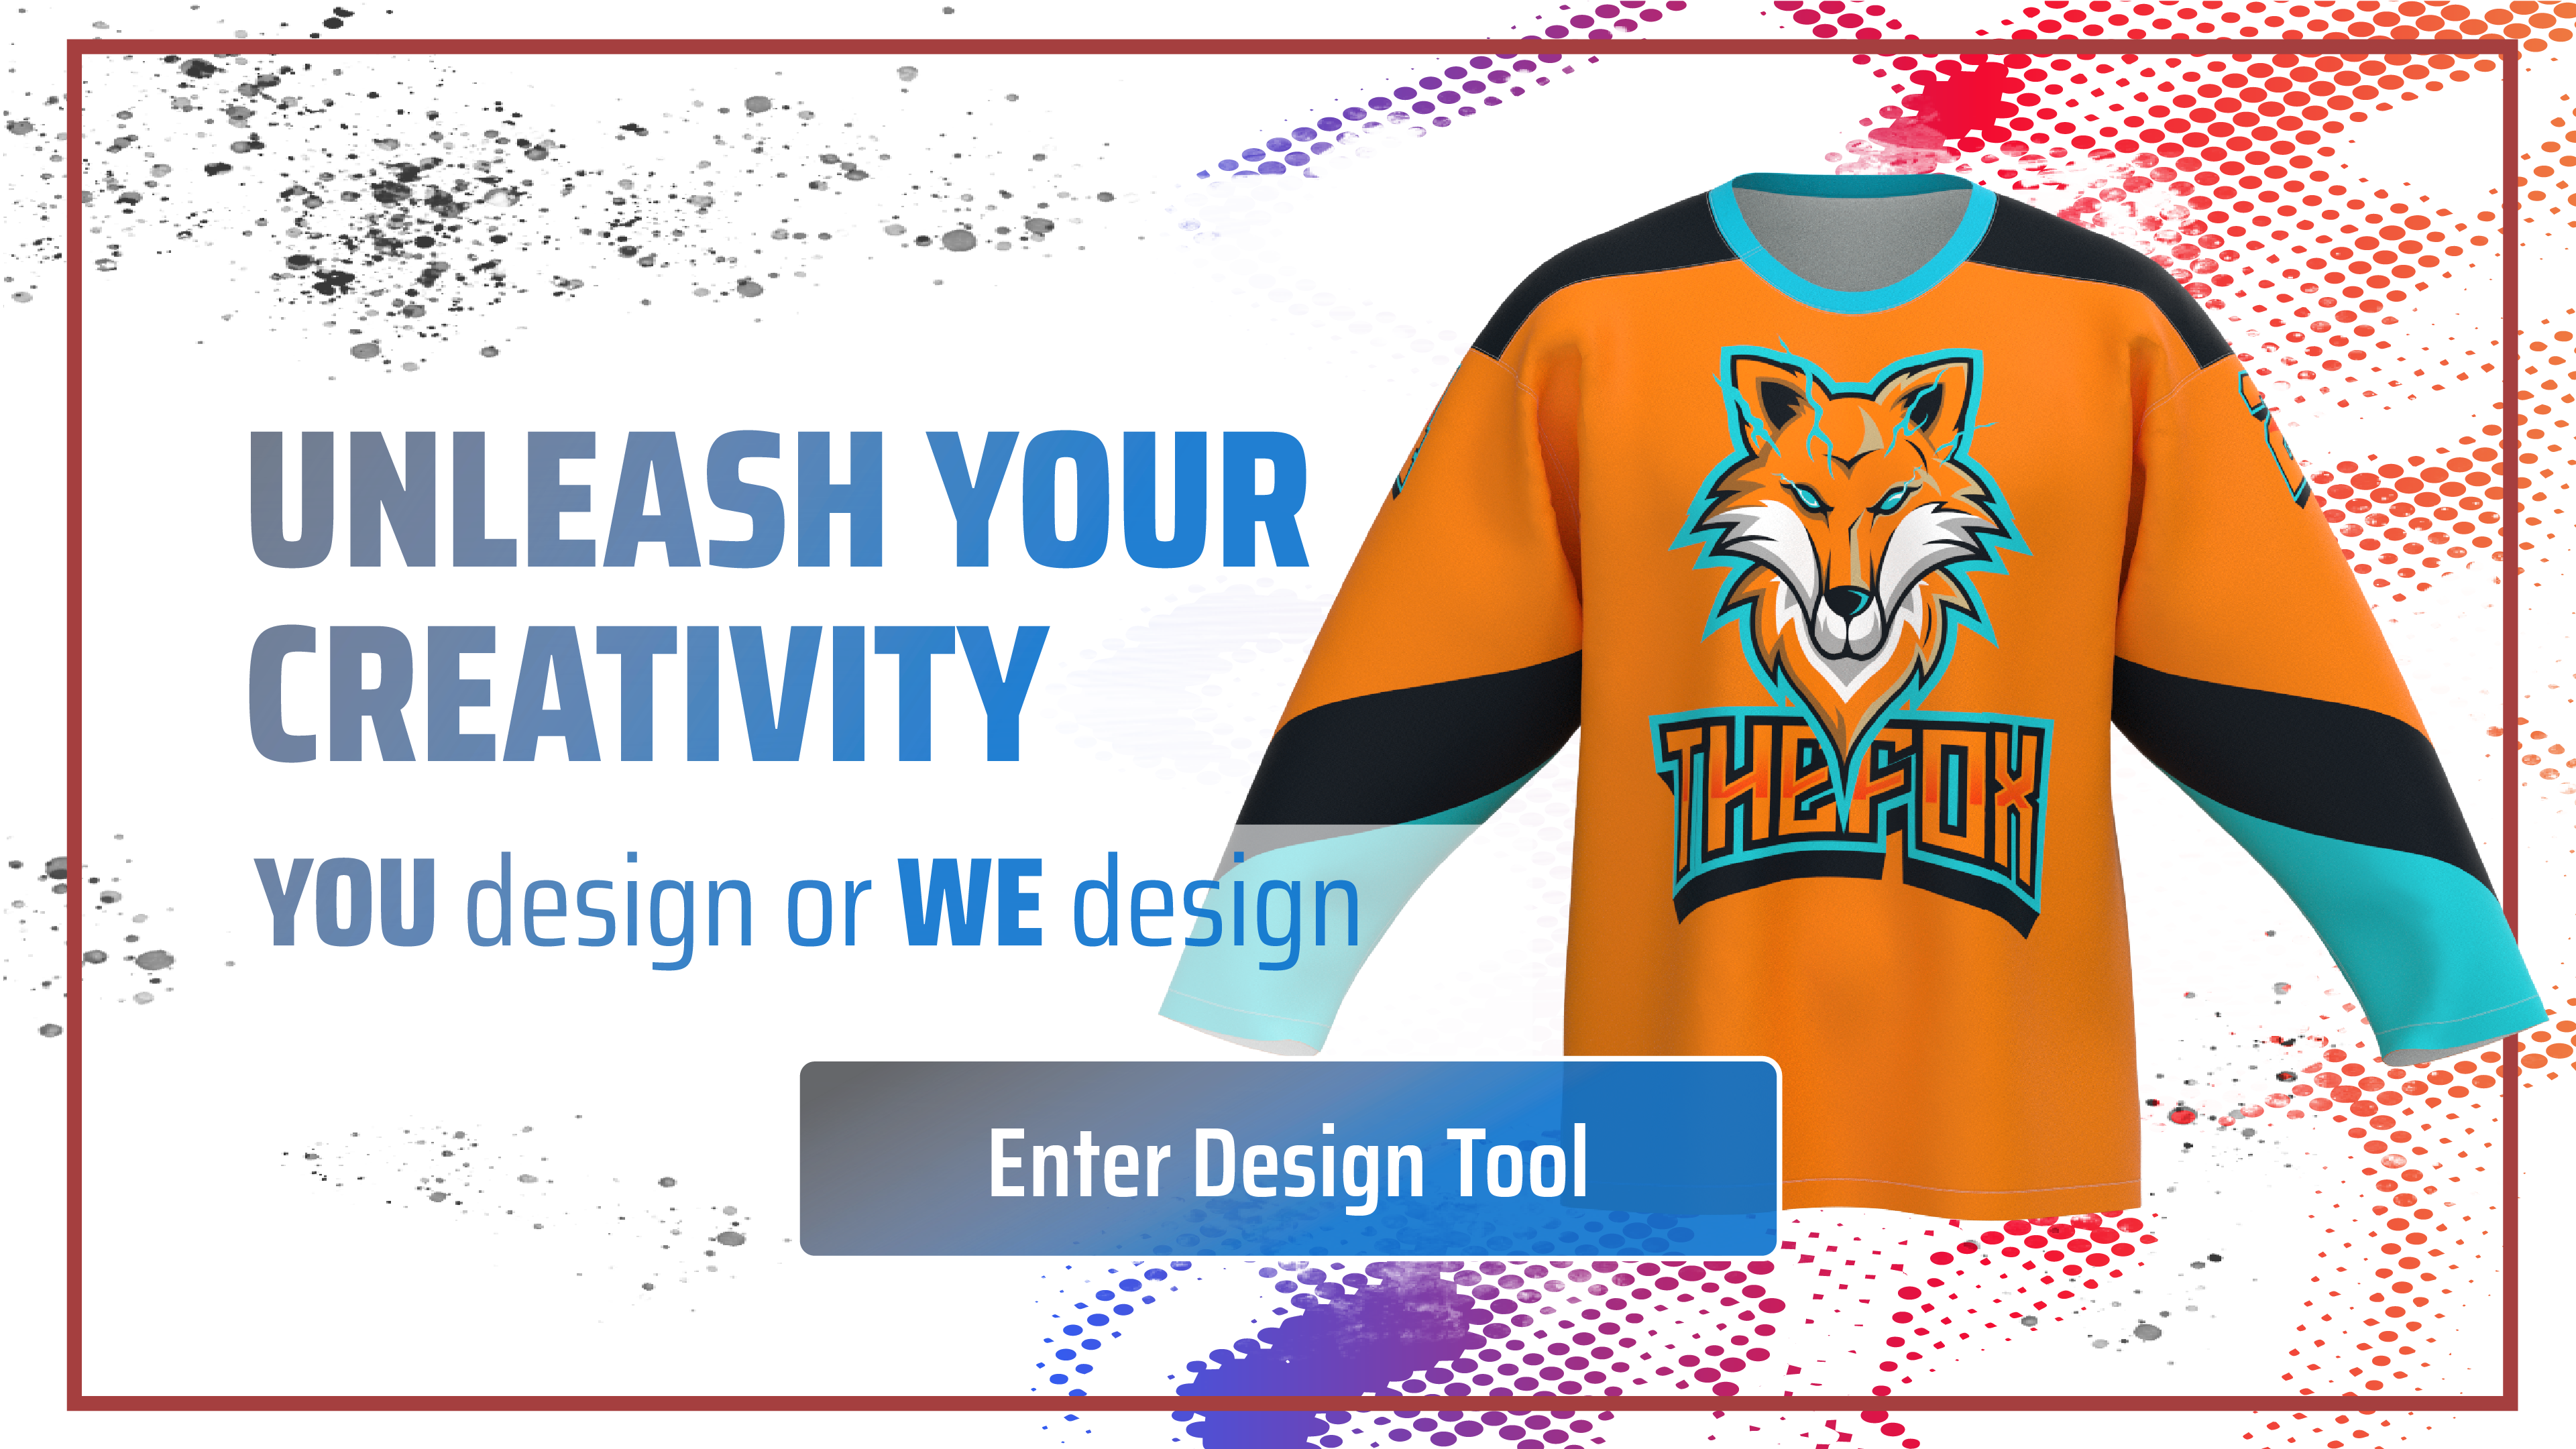 Custom Orange Hockey Jersey Design Sublimation Printing Ice Hockey